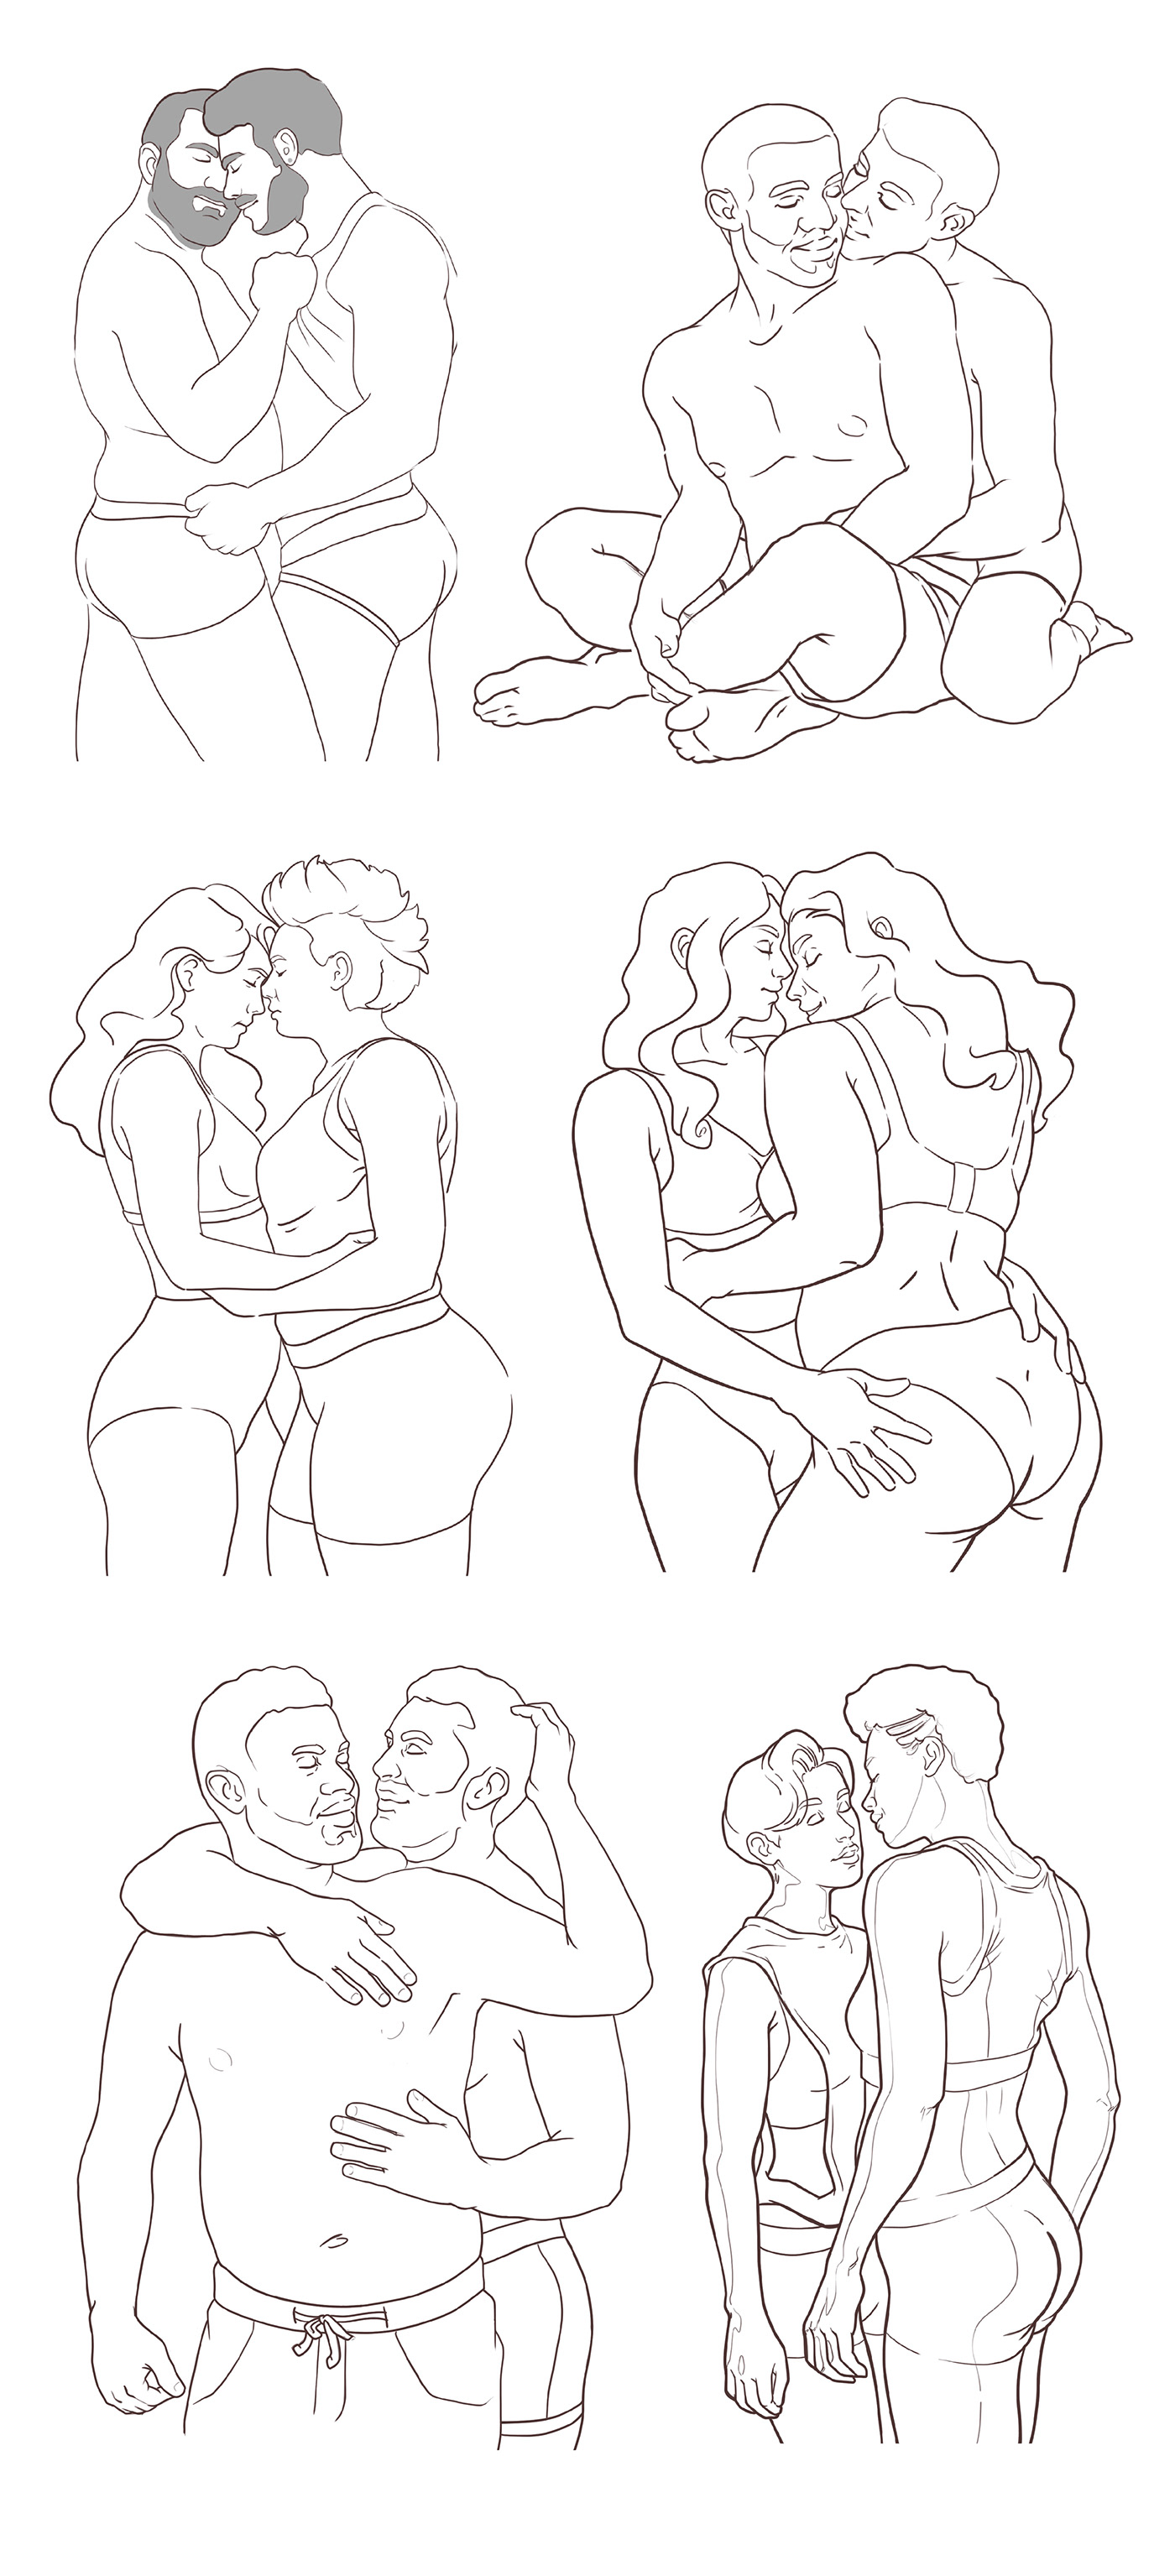 couple gay gay gay art kiss lesbian lesbians LGBT LGBTQ Love queer